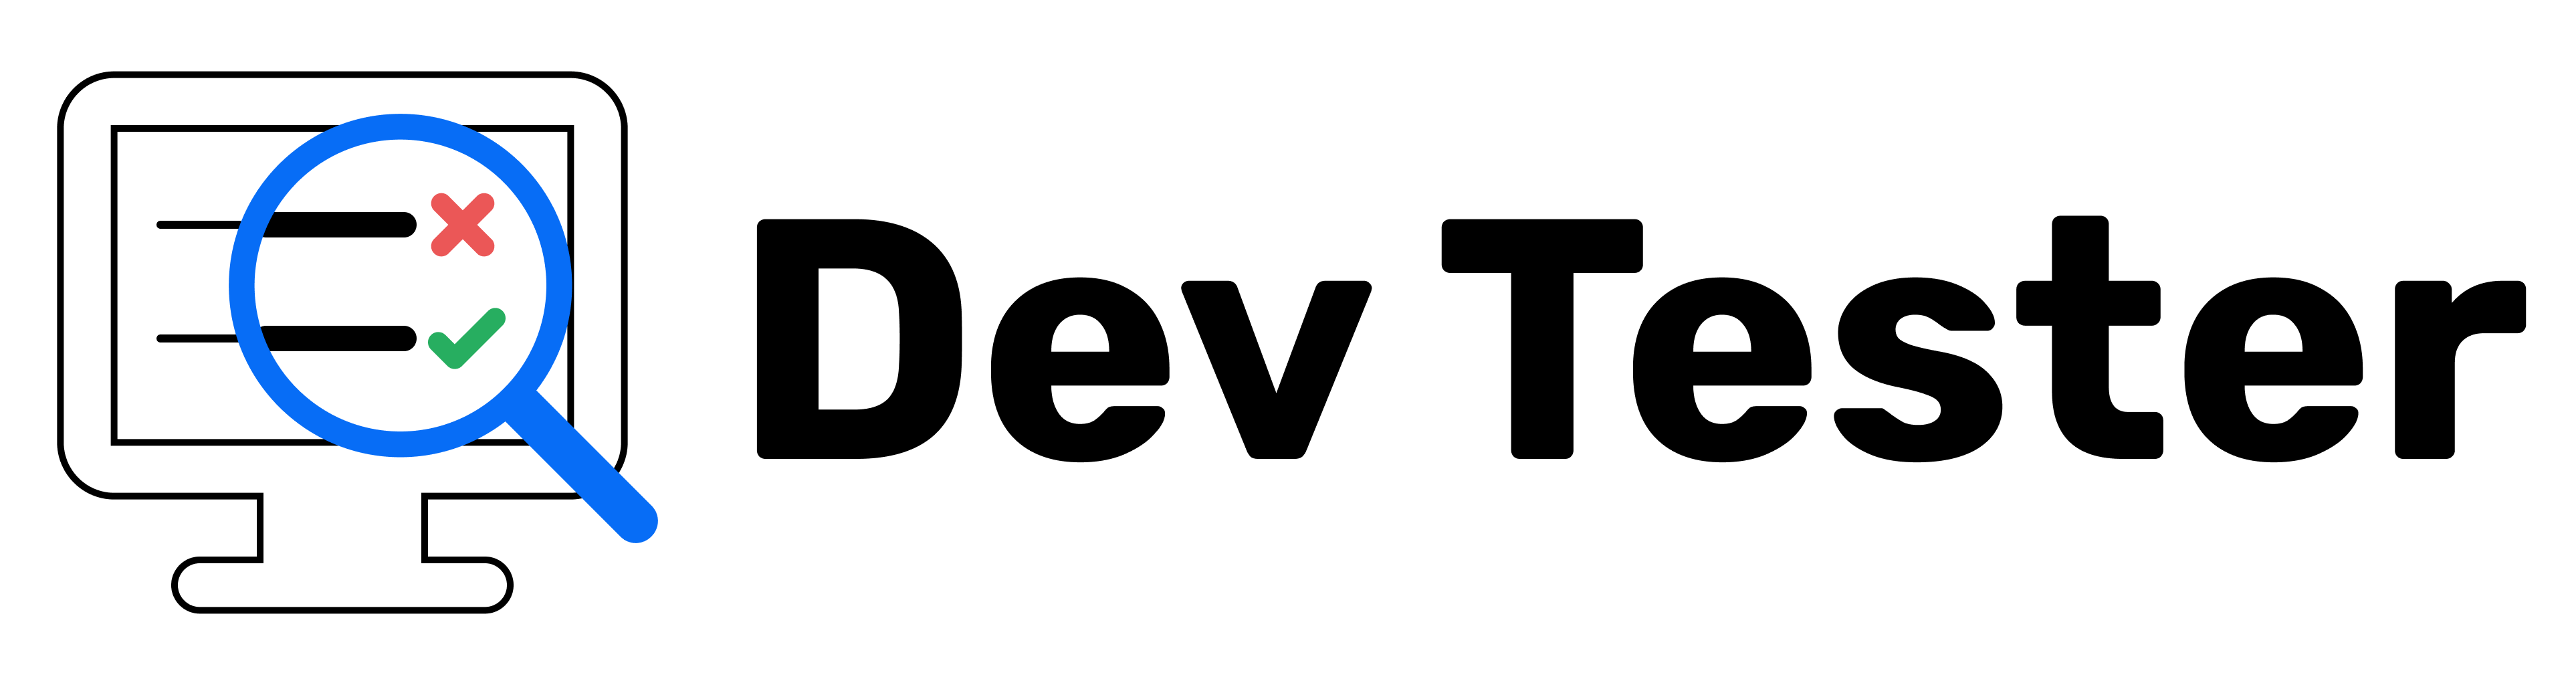 Dev Tester Logo